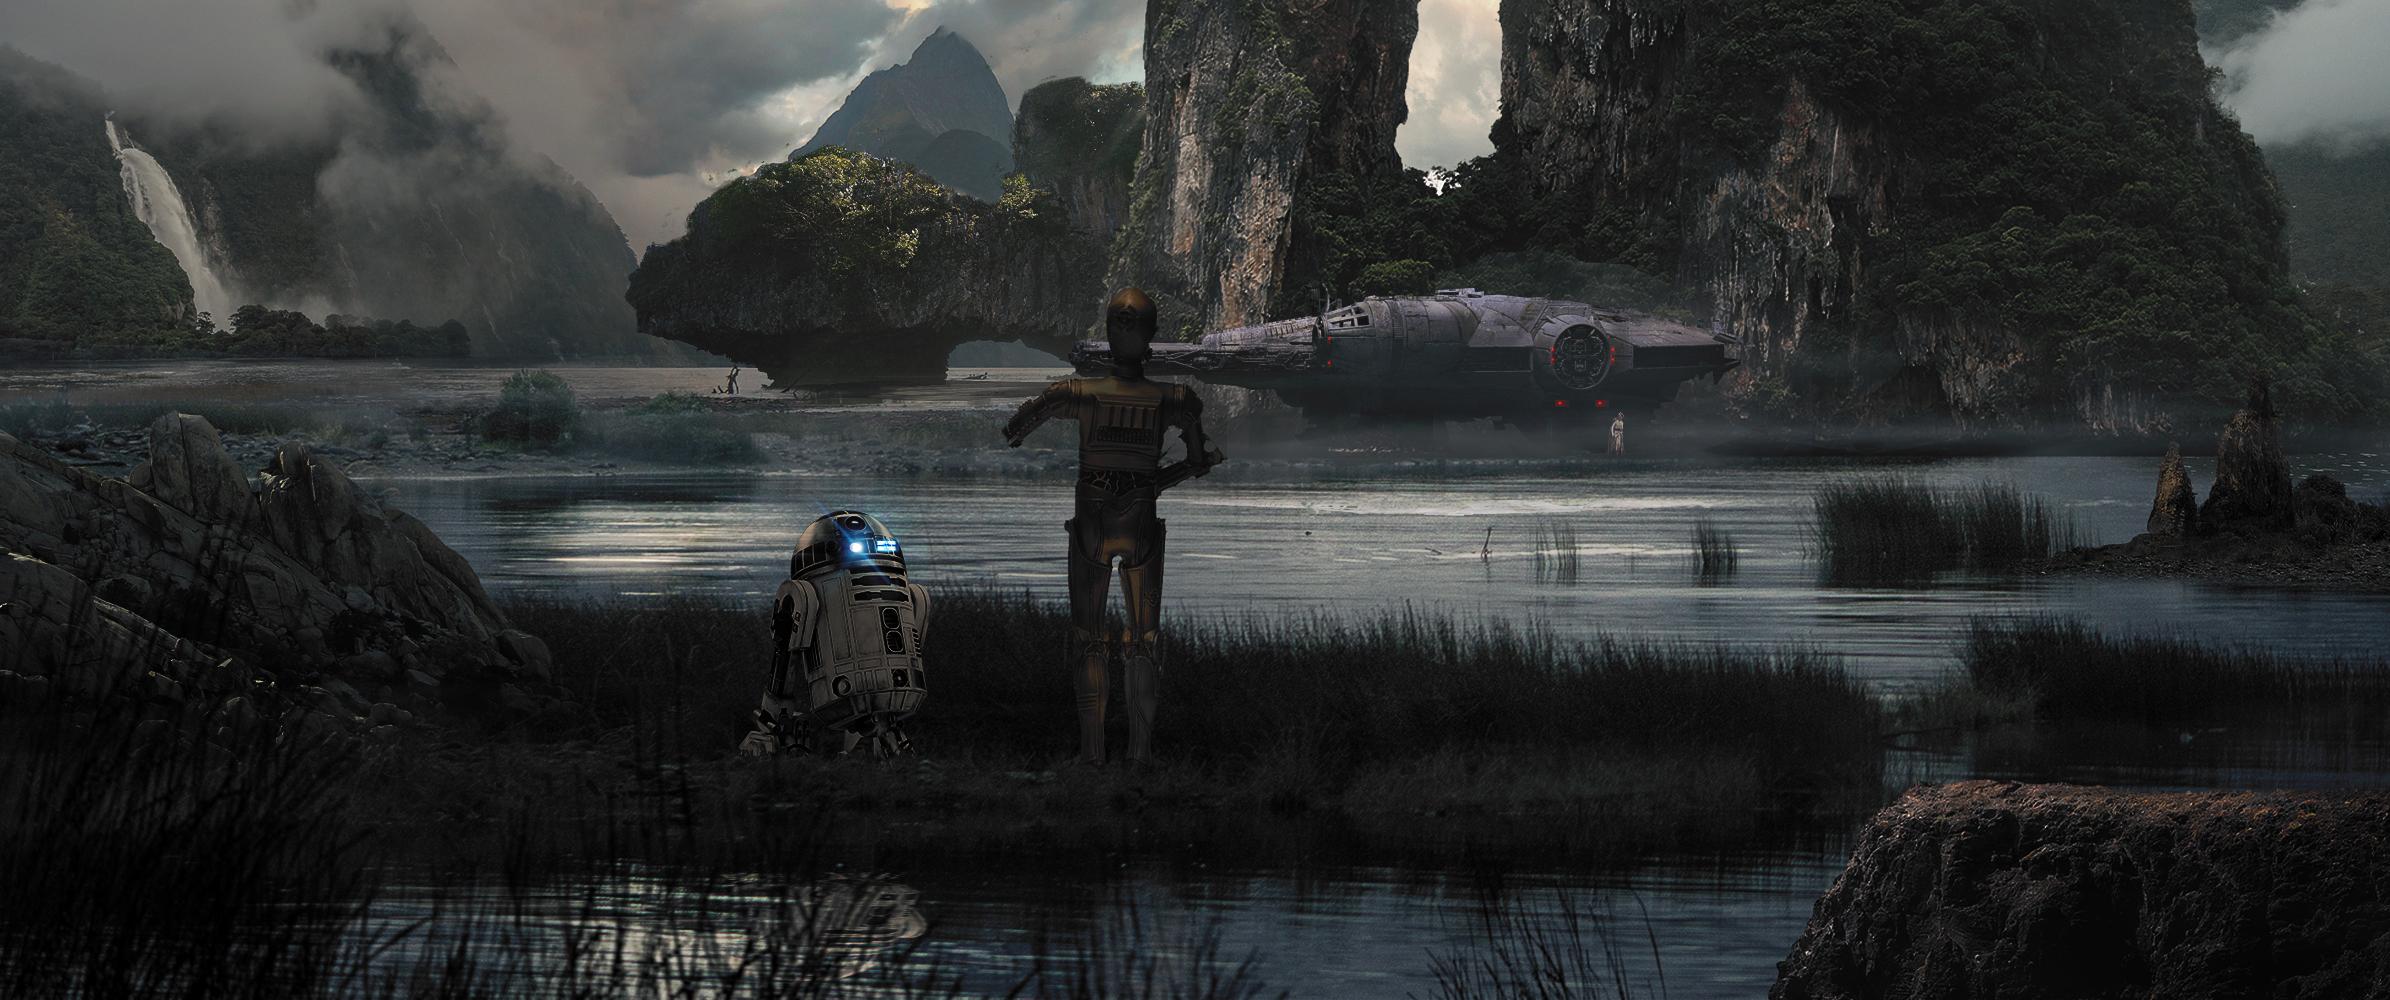 Star Wars R2 D2 Fan Art Millennium Falcon Star Wars Droids Dark Science Fiction Star Wars Ships 2390x1000